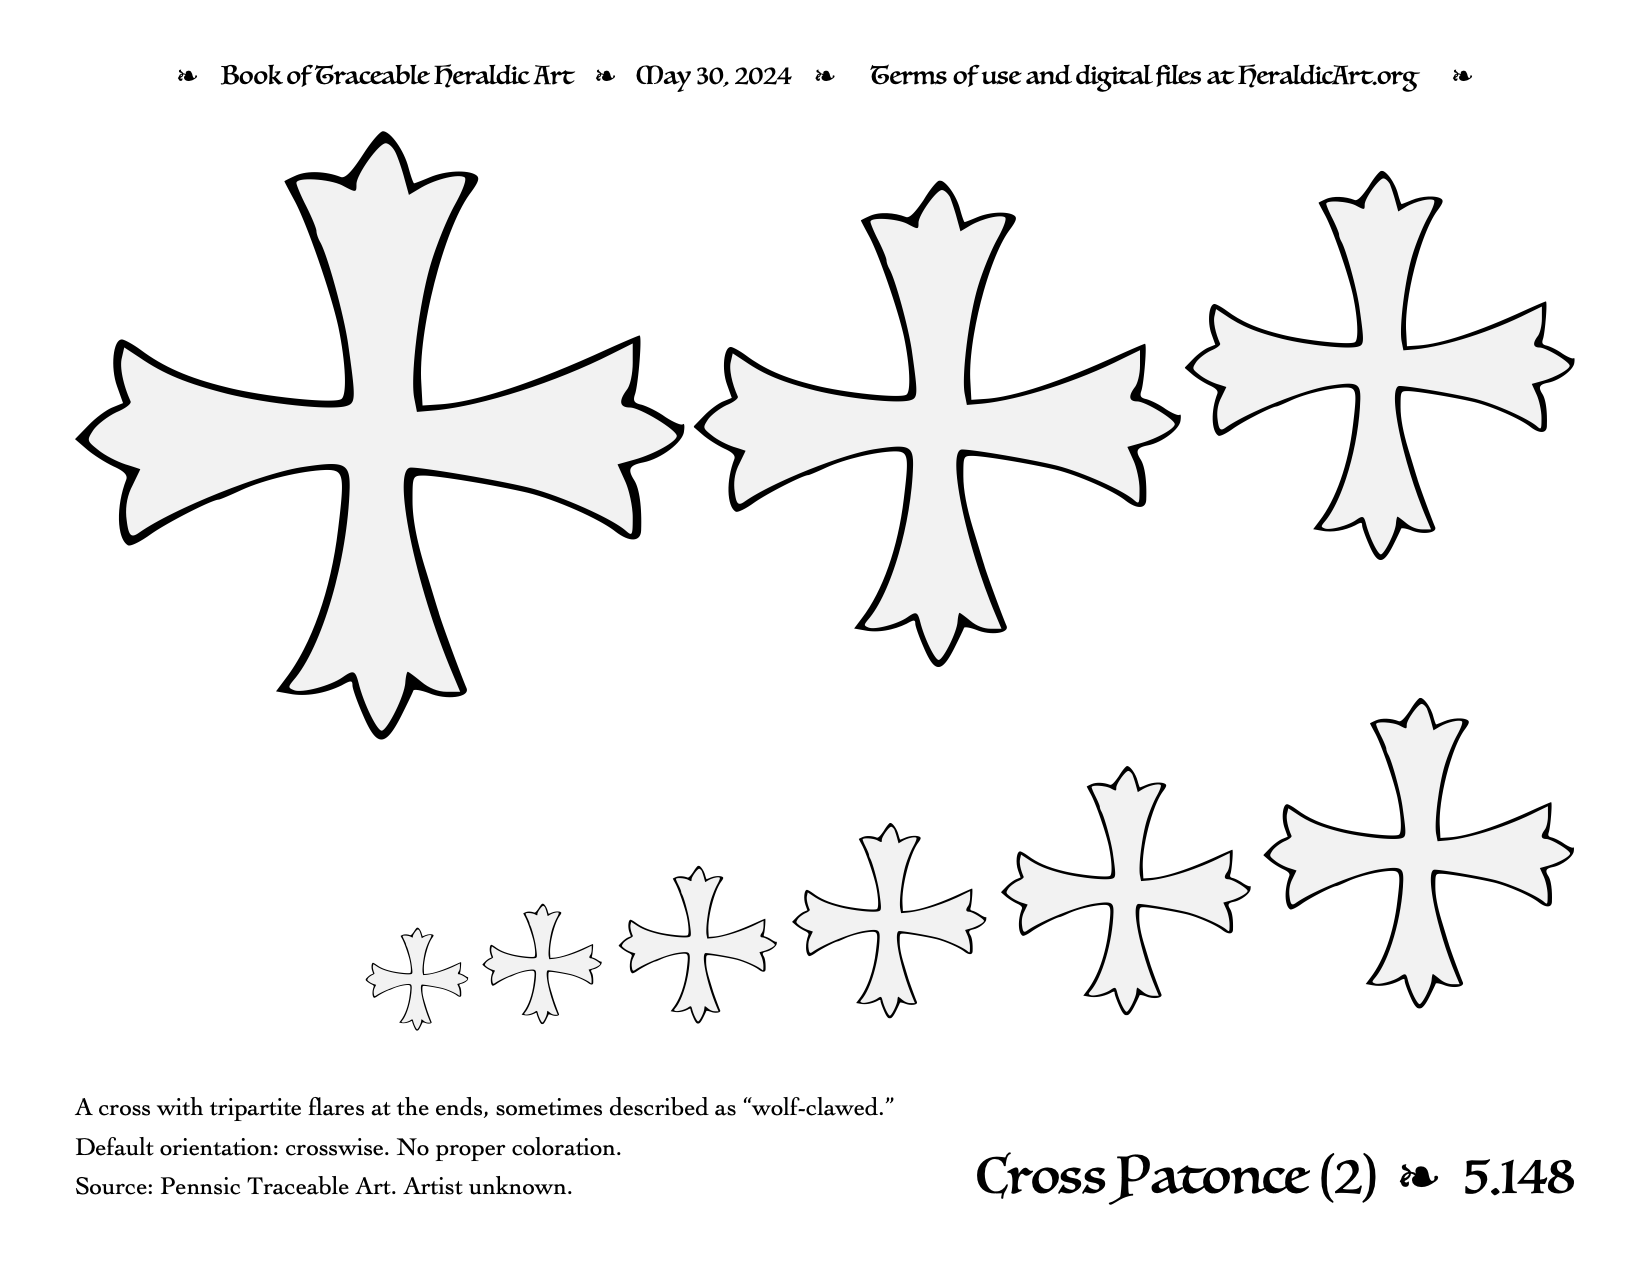 Cross (Charge) - Traceable Heraldic Art